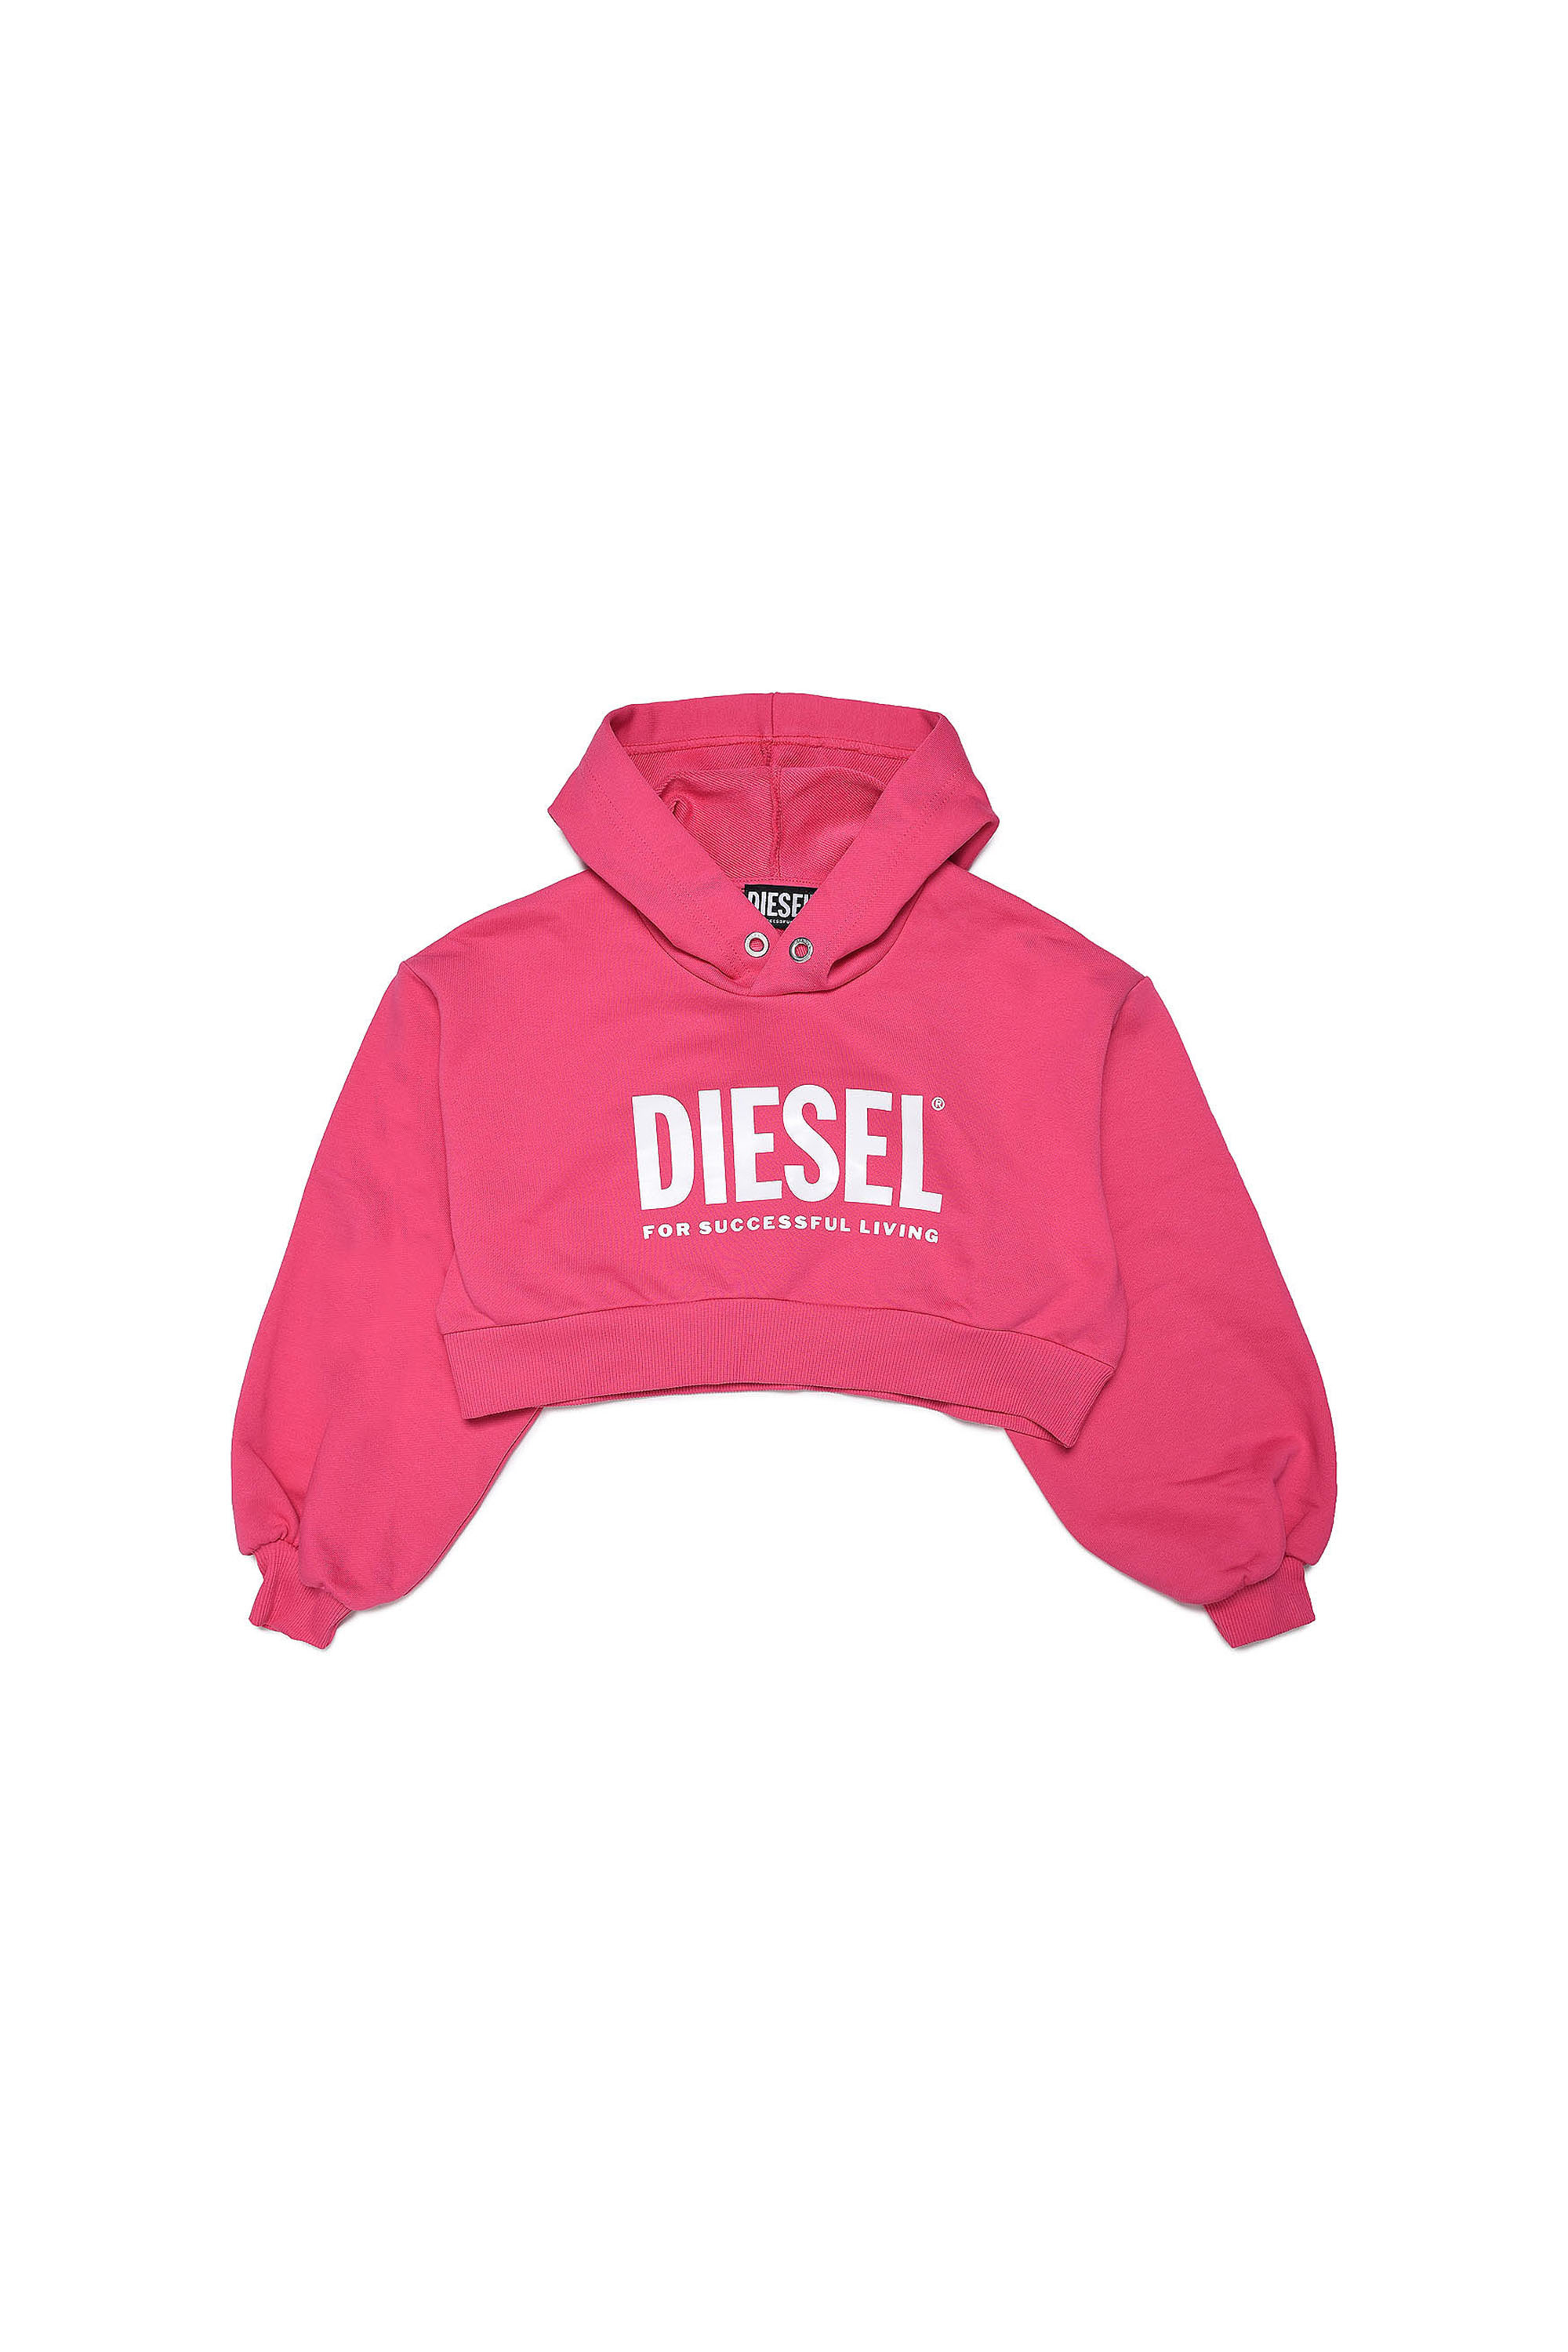 Diesel - SKRALOGO, Pink - Image 1